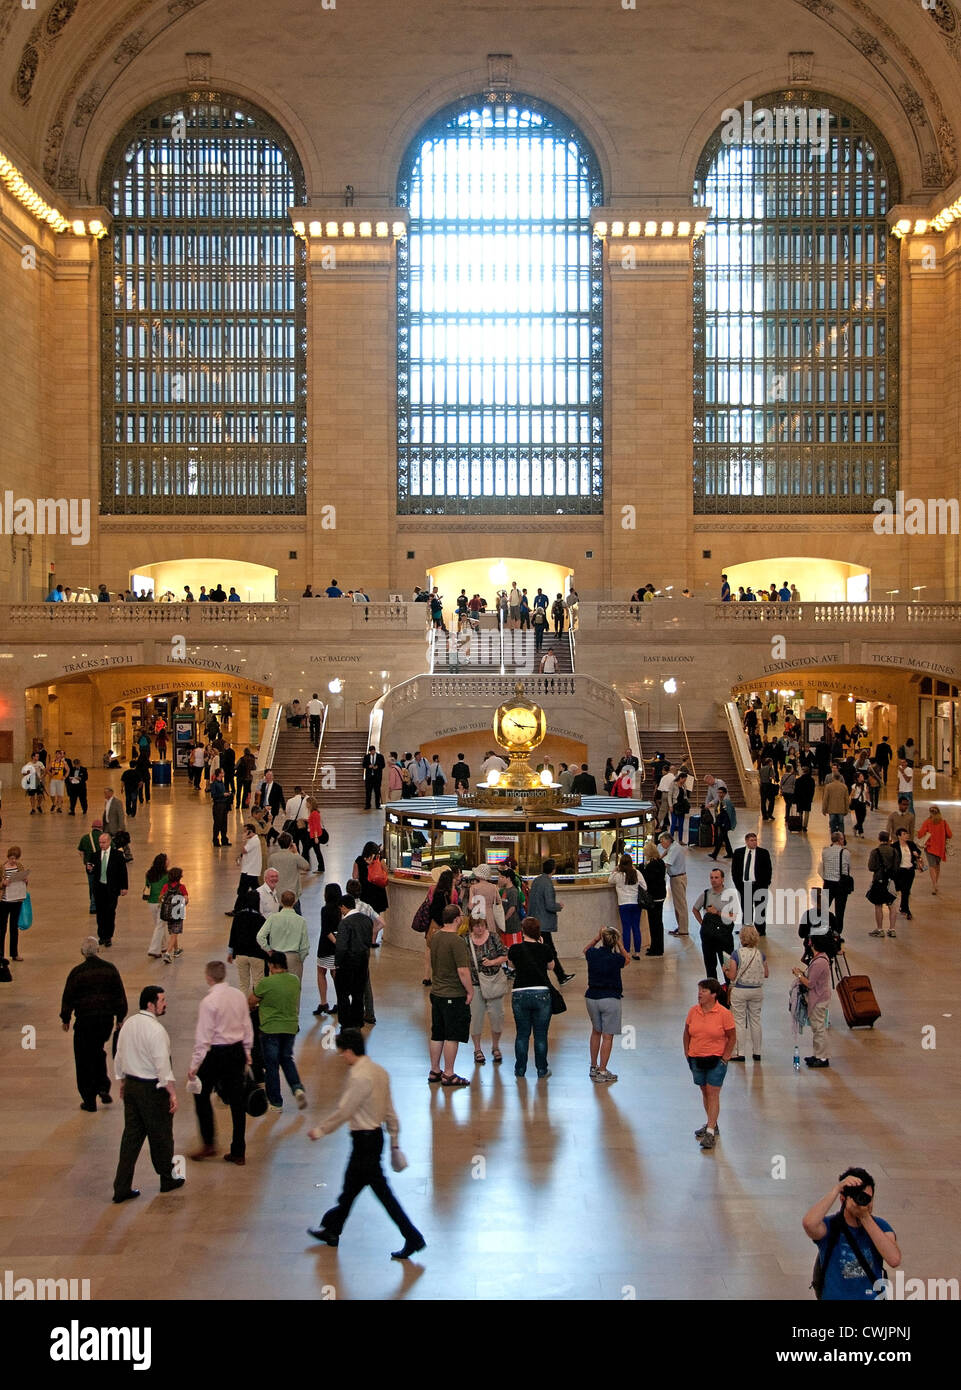 Grand Central Terminal ,Grand Central Station, Grand Central, commuter rail terminal located at 42nd Street and Park Avenue, Manhattan, New York City. Stock Photo